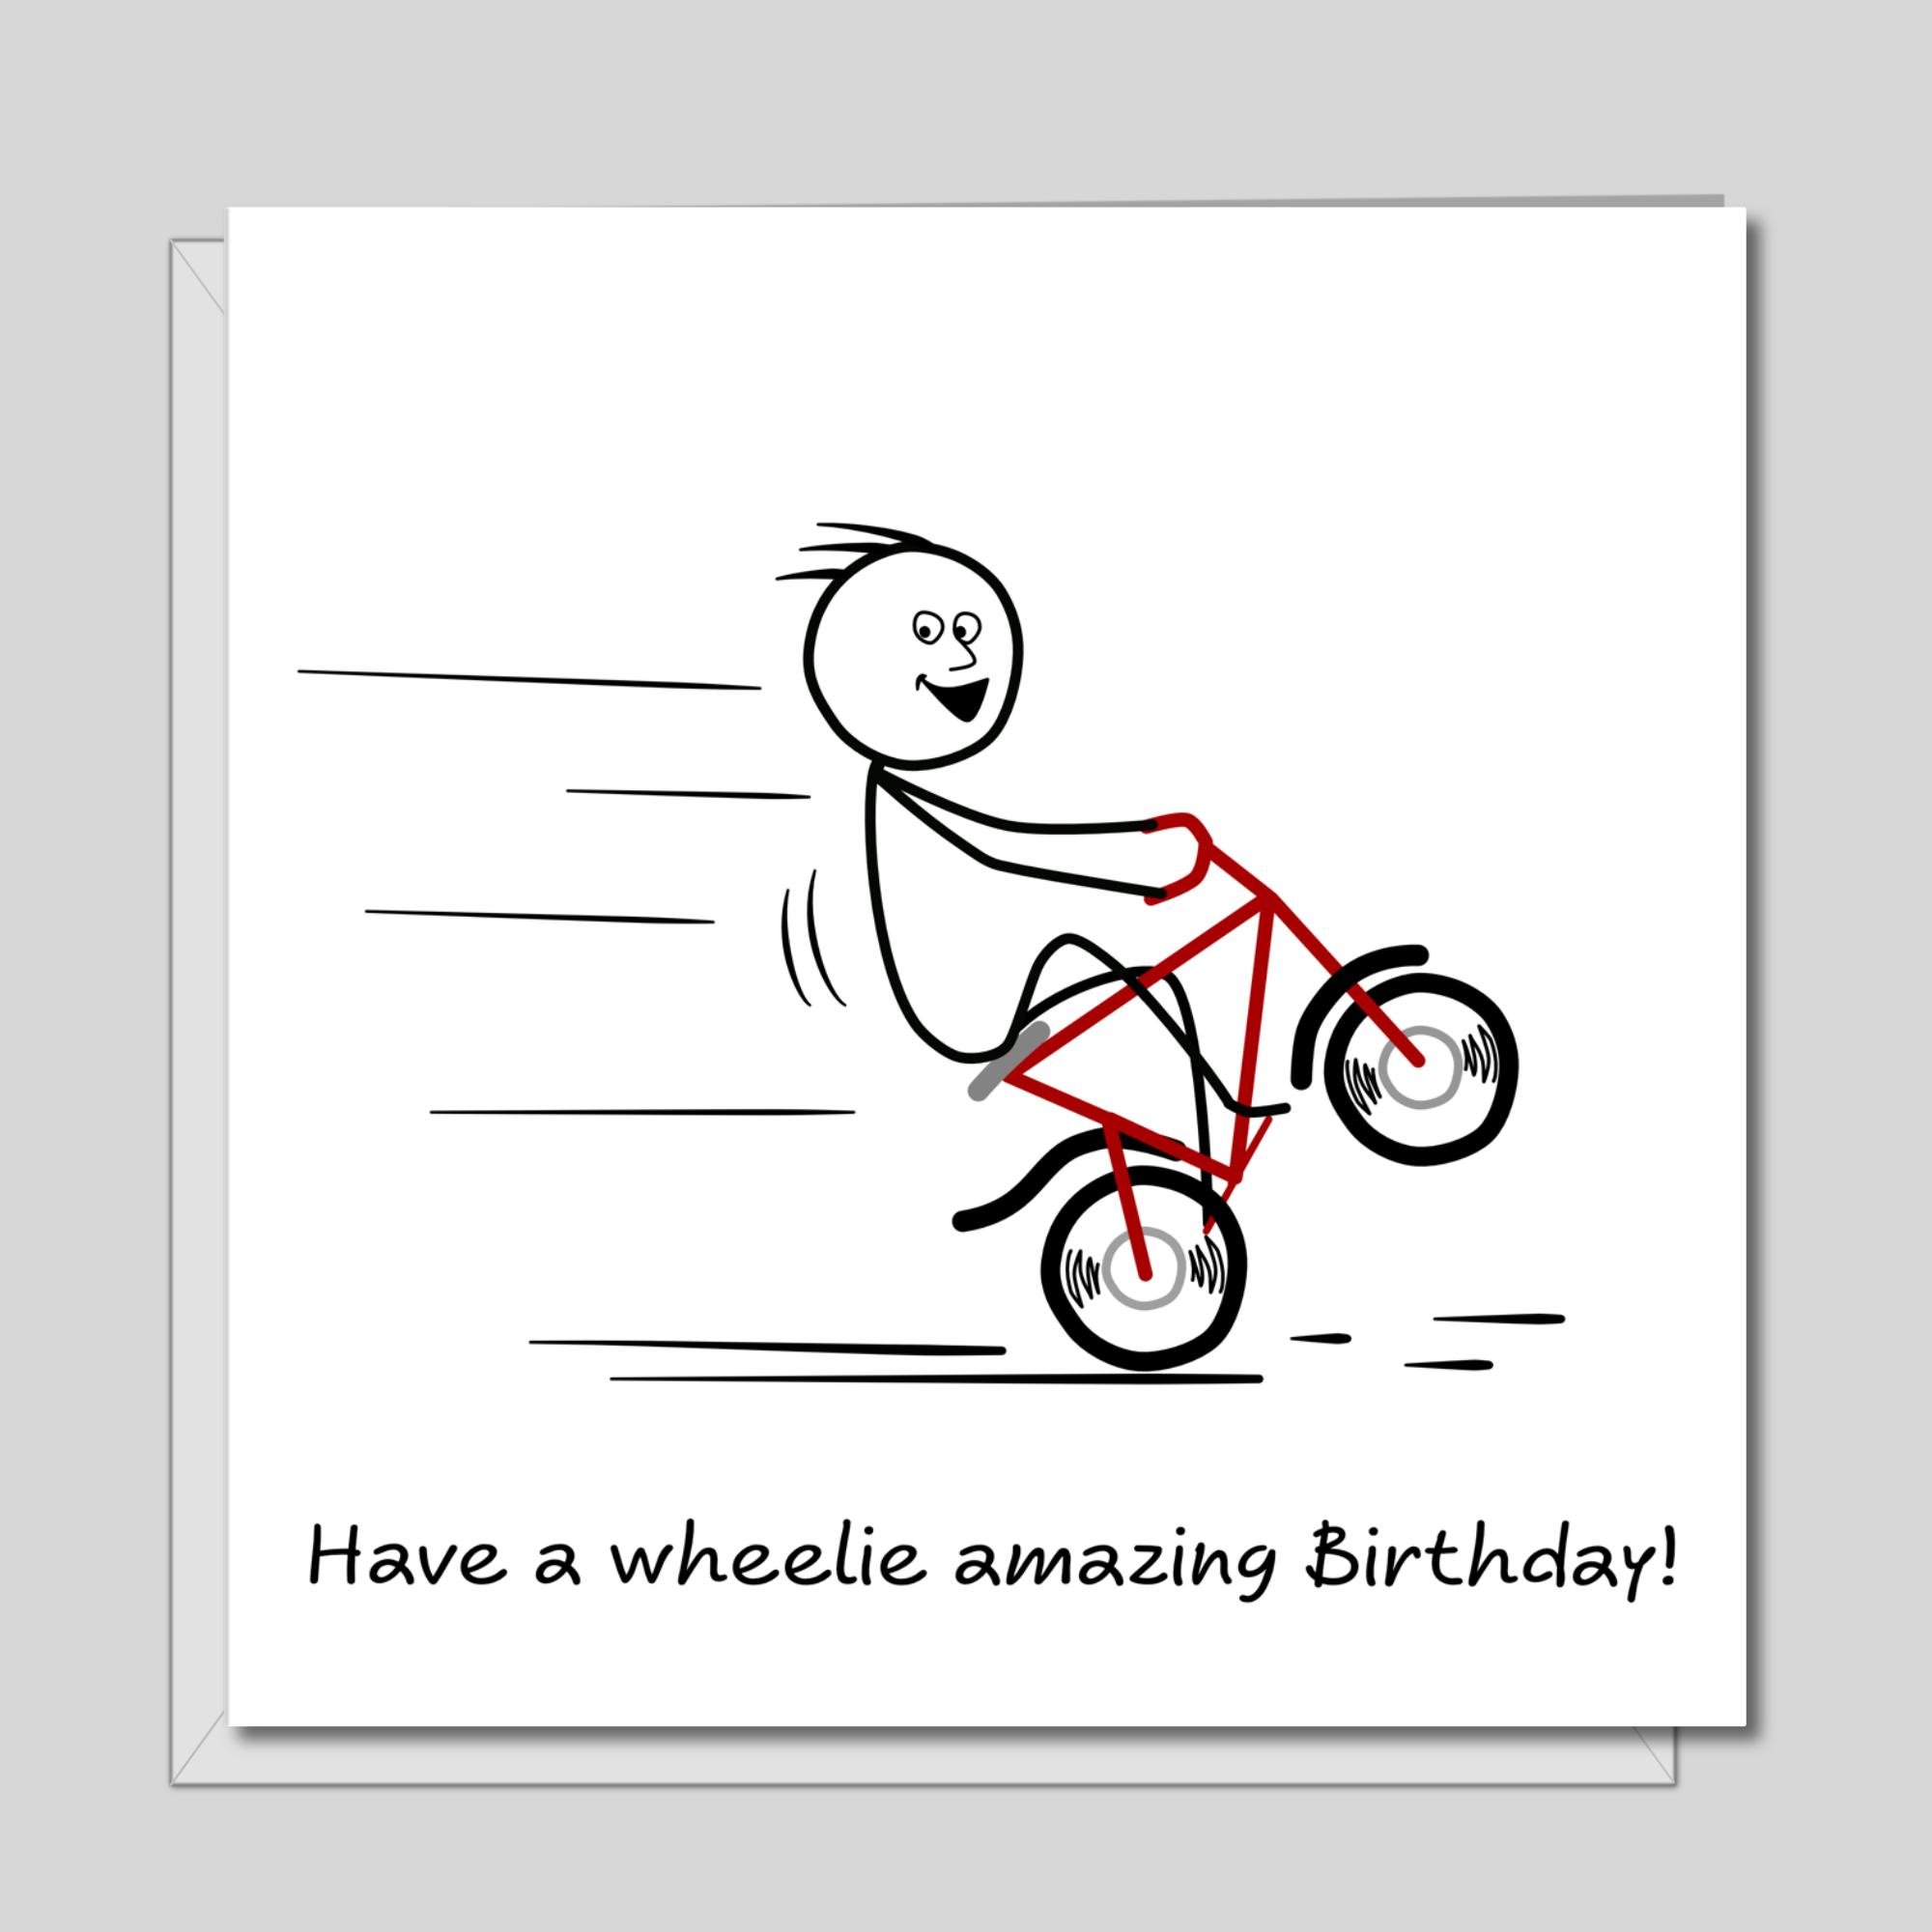 Fantastic Birthday Card for friend, son, family, student, teenager, teen - Funny, Humorous, Cartoon bike wheelie - bicycle 10 11 12 13 14